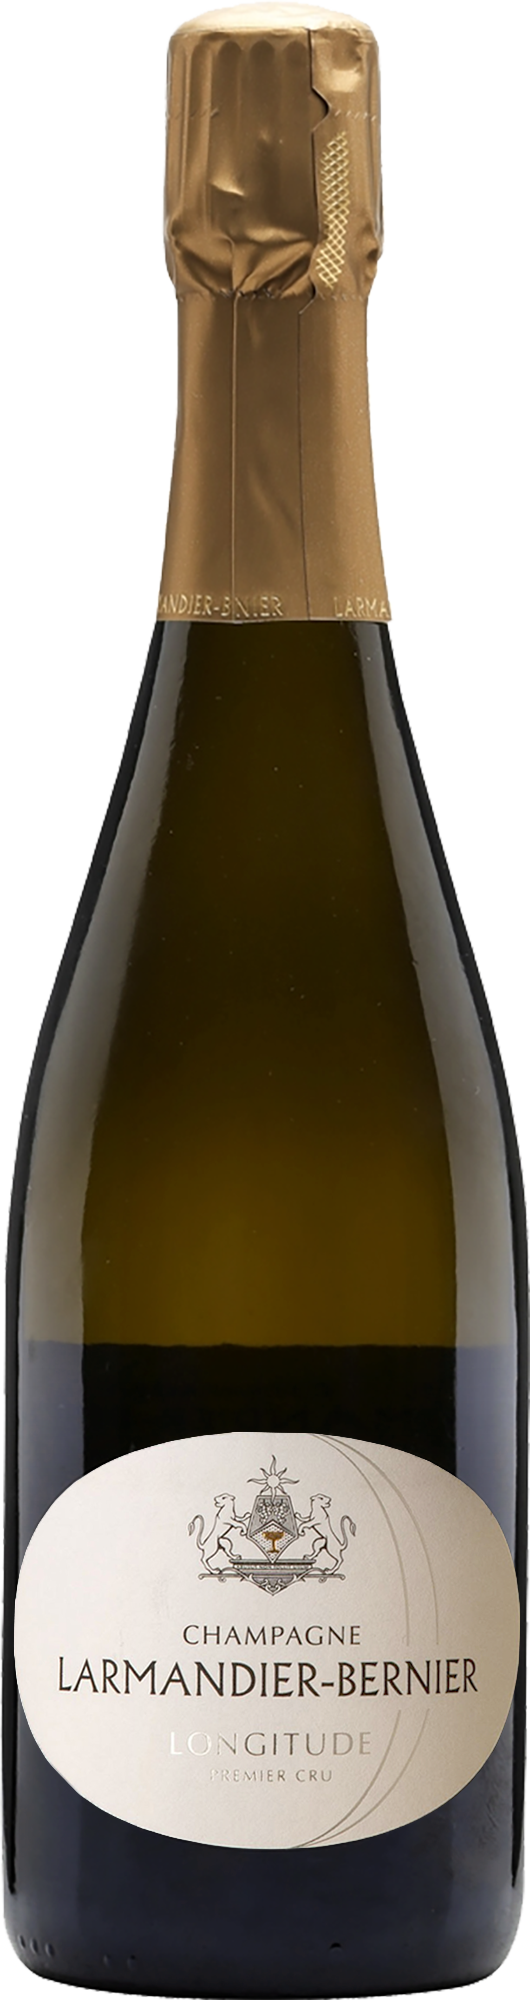 Champagne Larmandier-Bernier 1er Cru Longitude Blanc de Blancs NV (Base 20 Disg. Nov 2022)